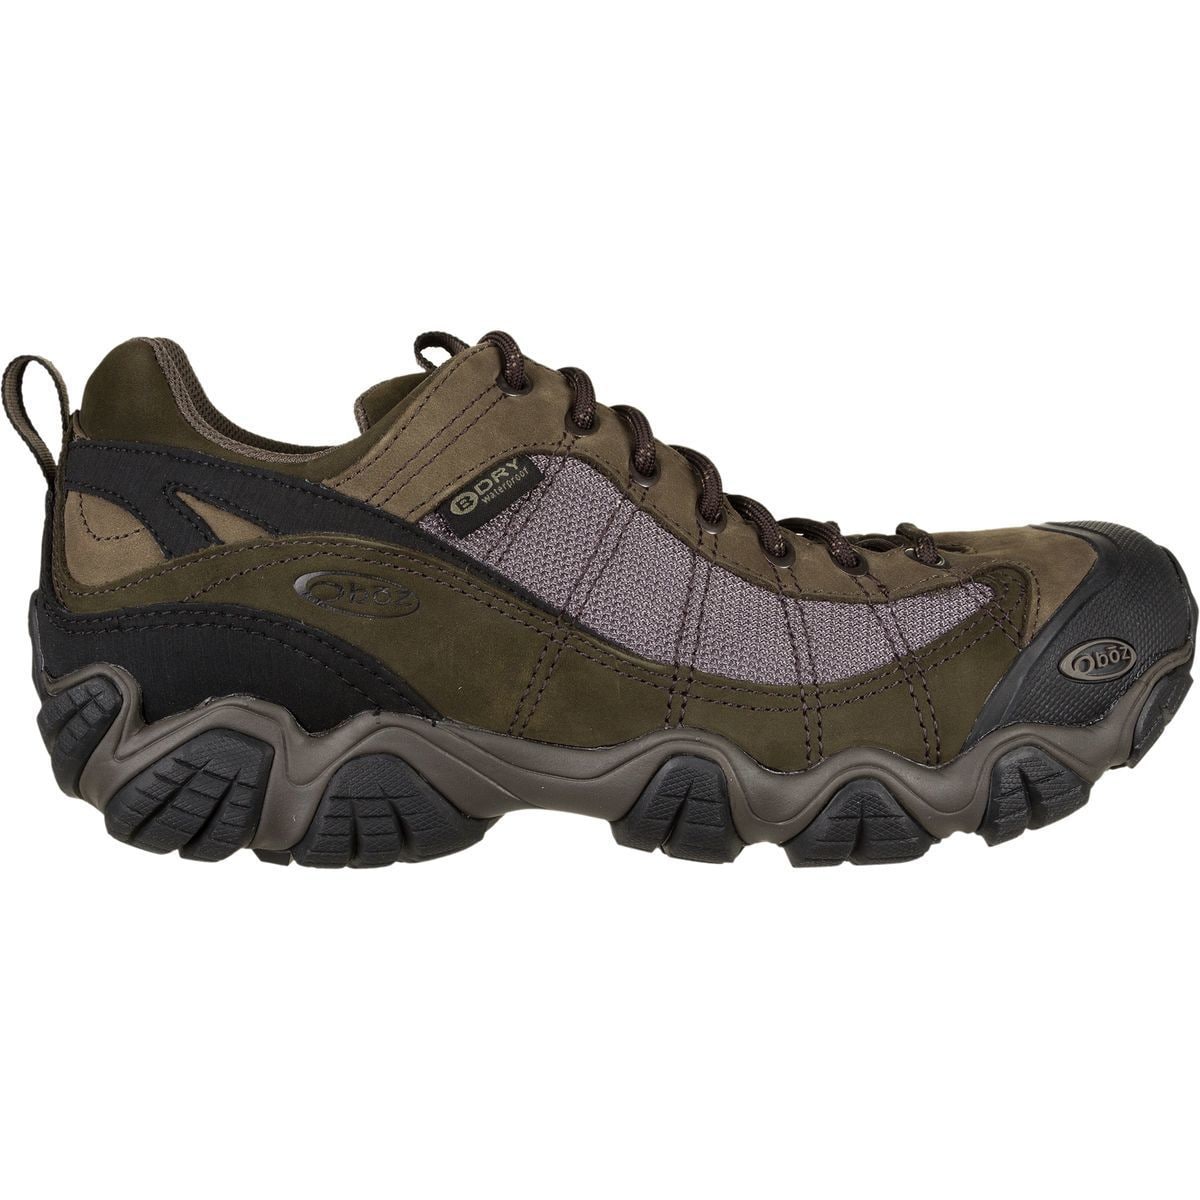 Firebrand II B-Dry Hiking Shoe - Men